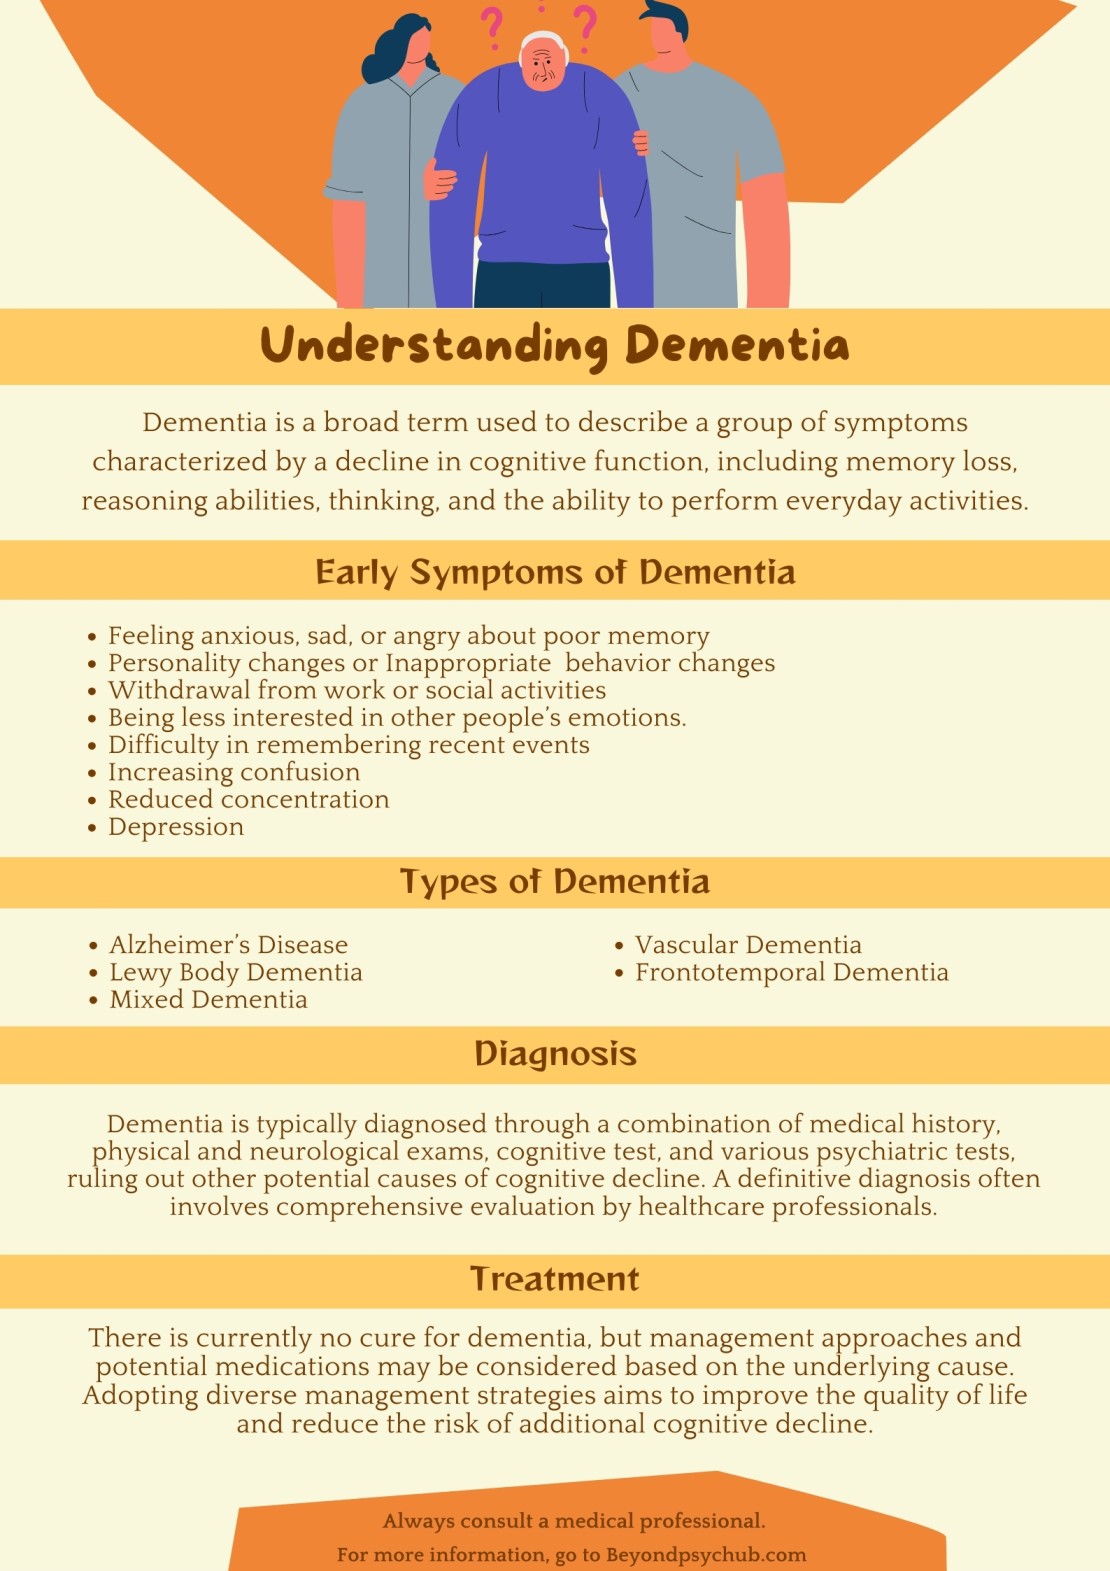 dementia infographic 2